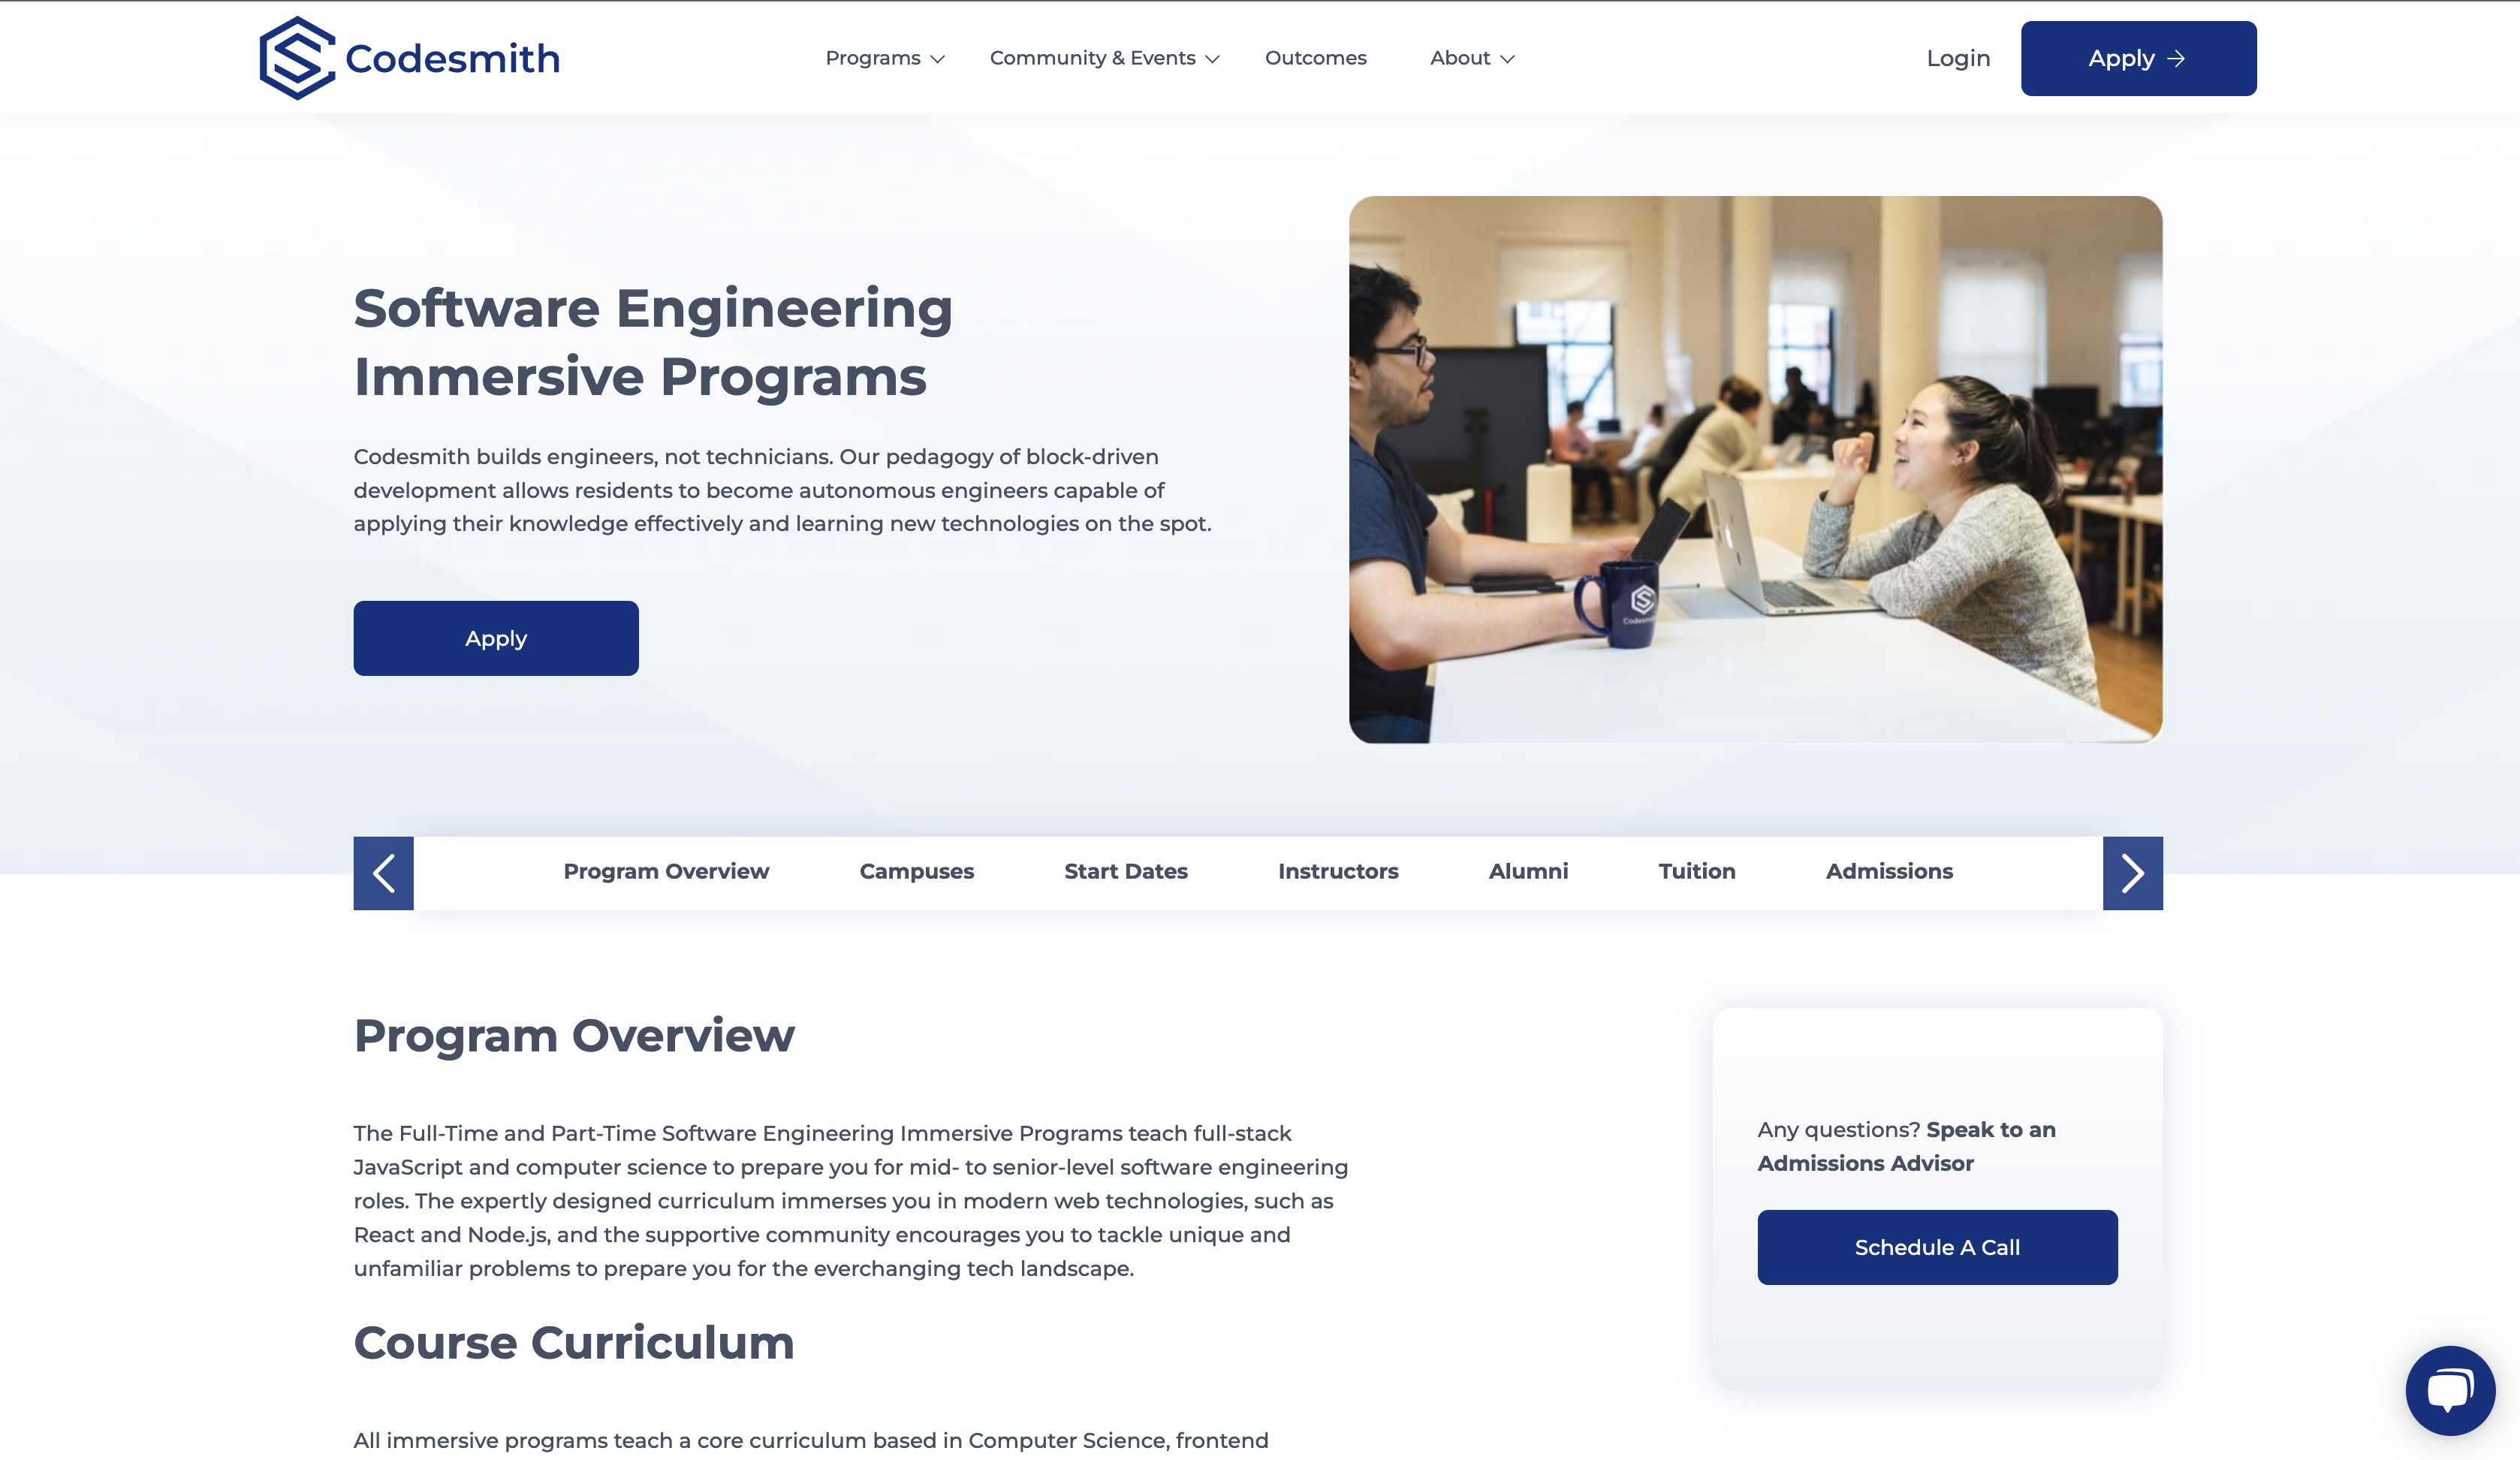 Codesmith website Image.